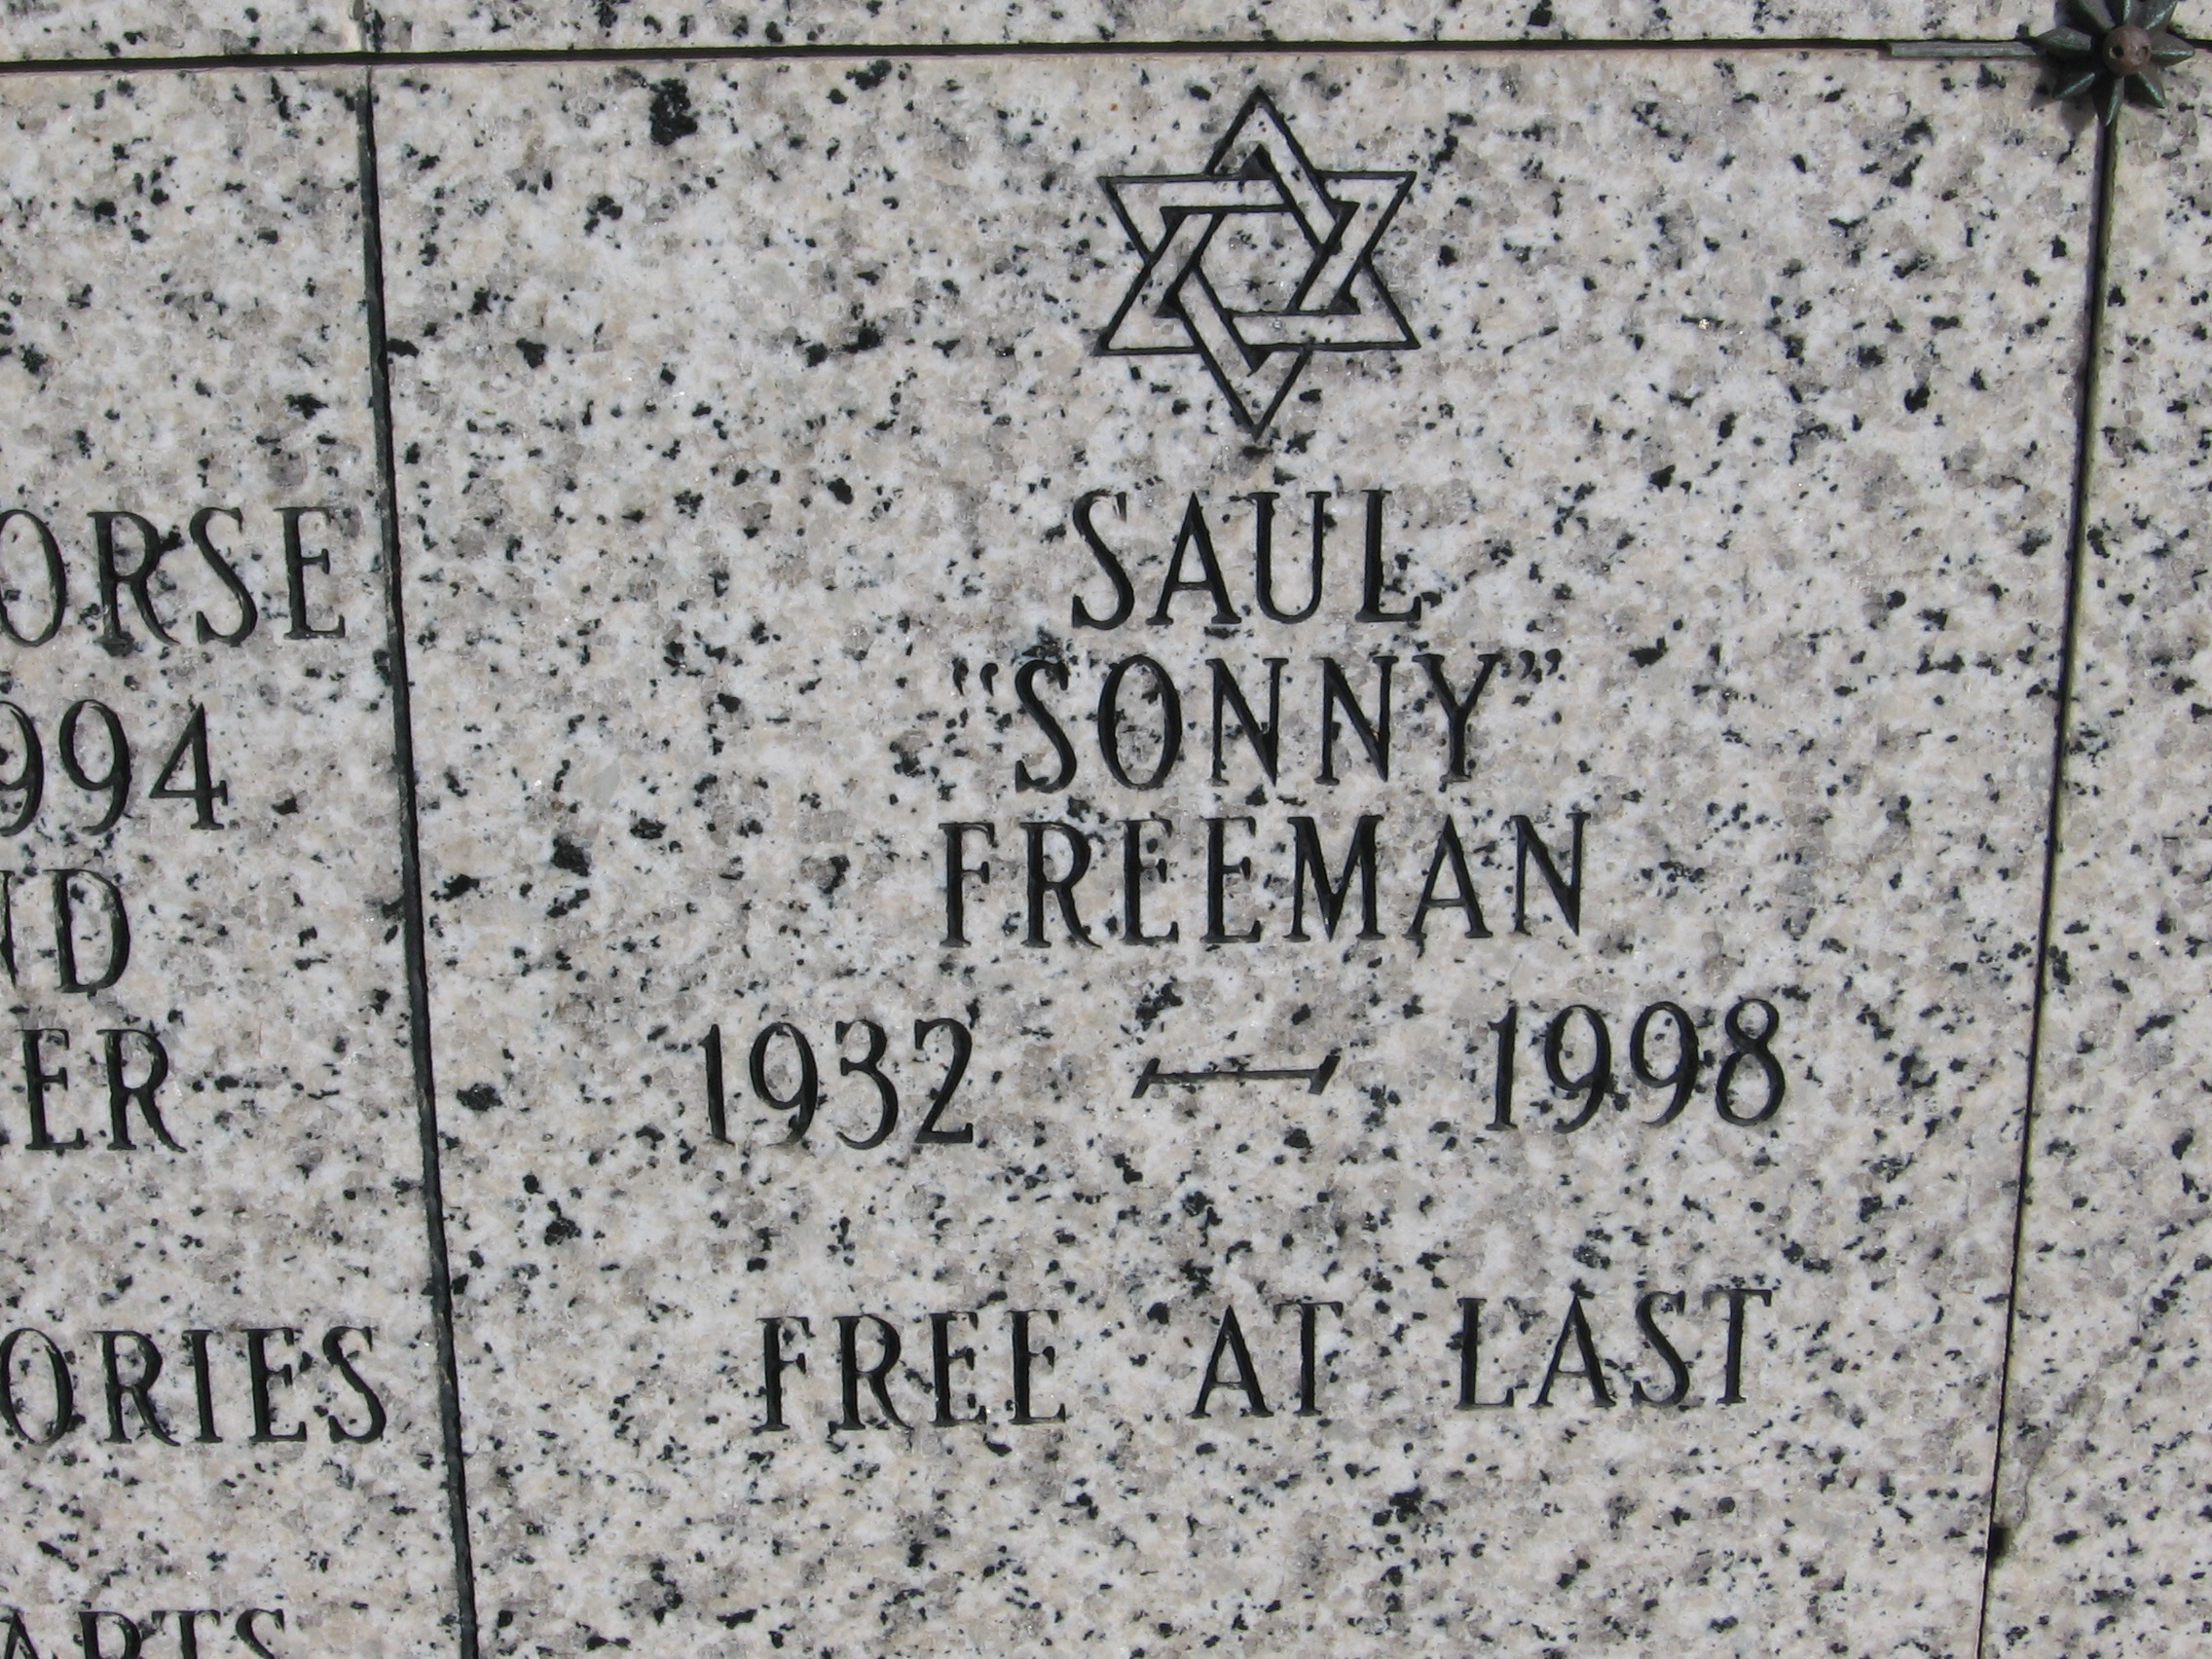 Saul "Sonny" Freeman